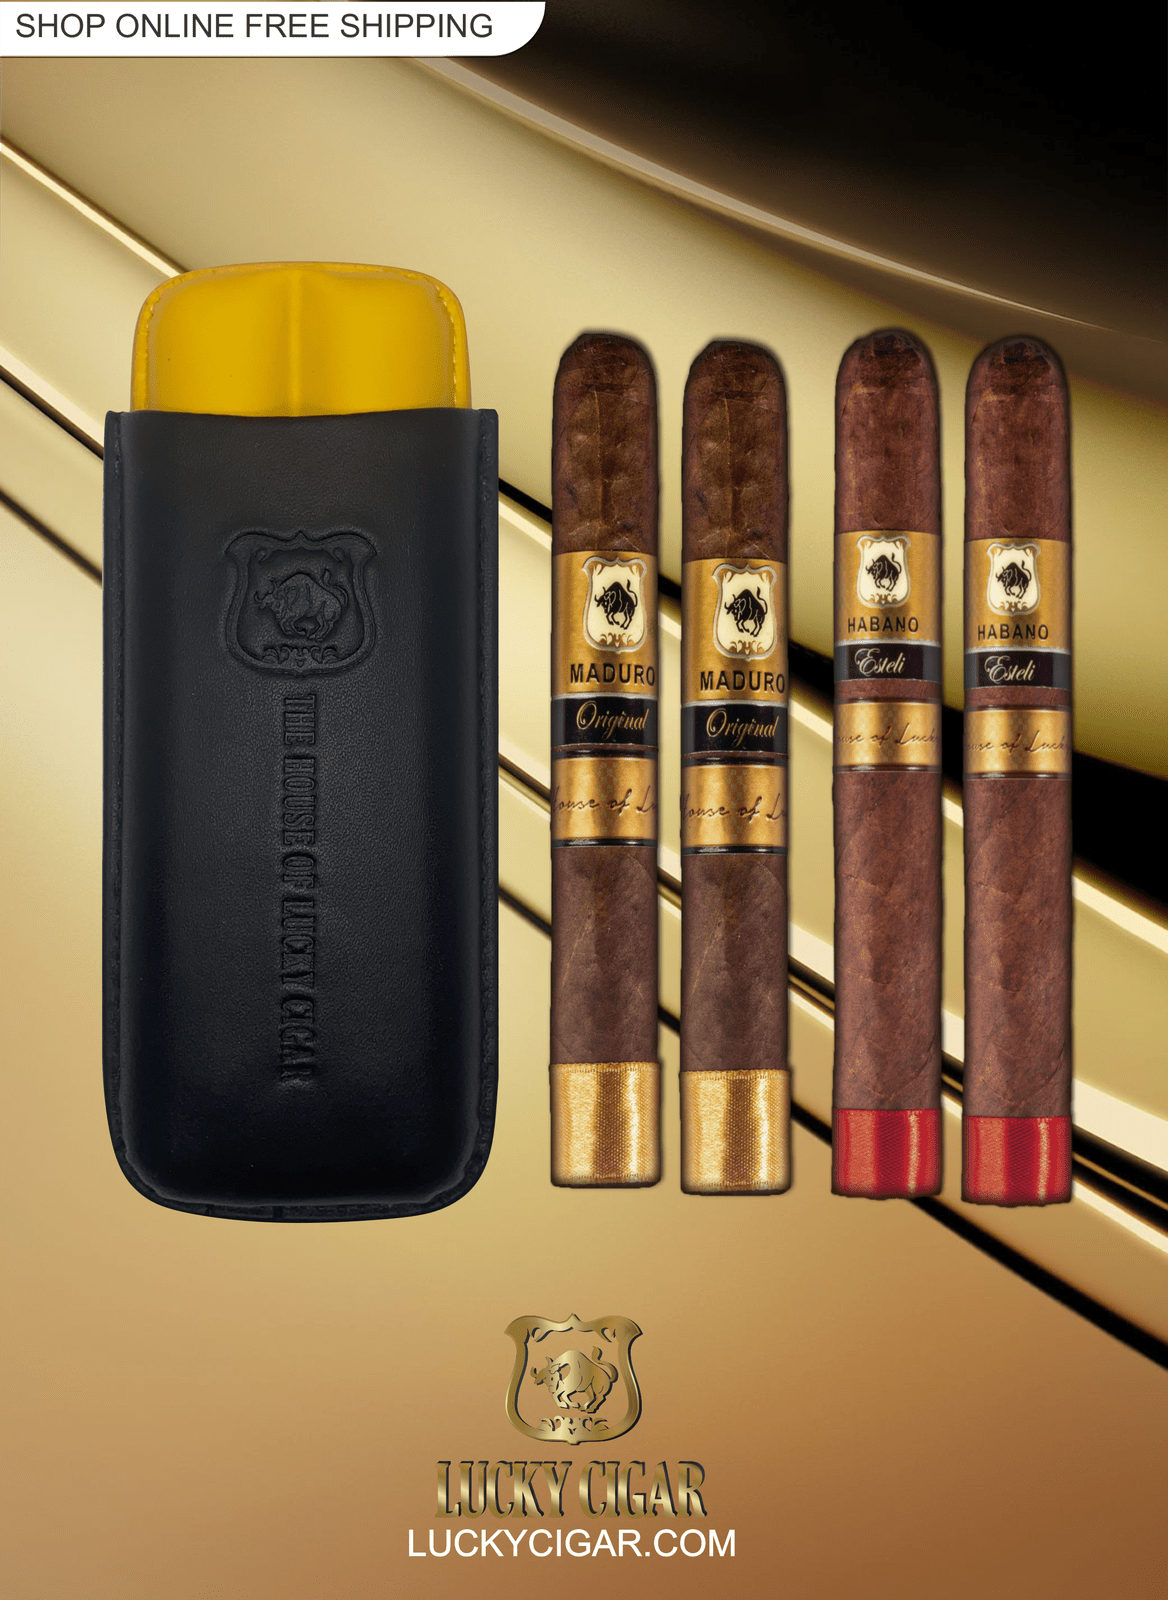 Lucky Cigar Sampler Sets: Set of 4 Toro Cigars, Habano Esteli, Maduro Original with Travel Humidor Case